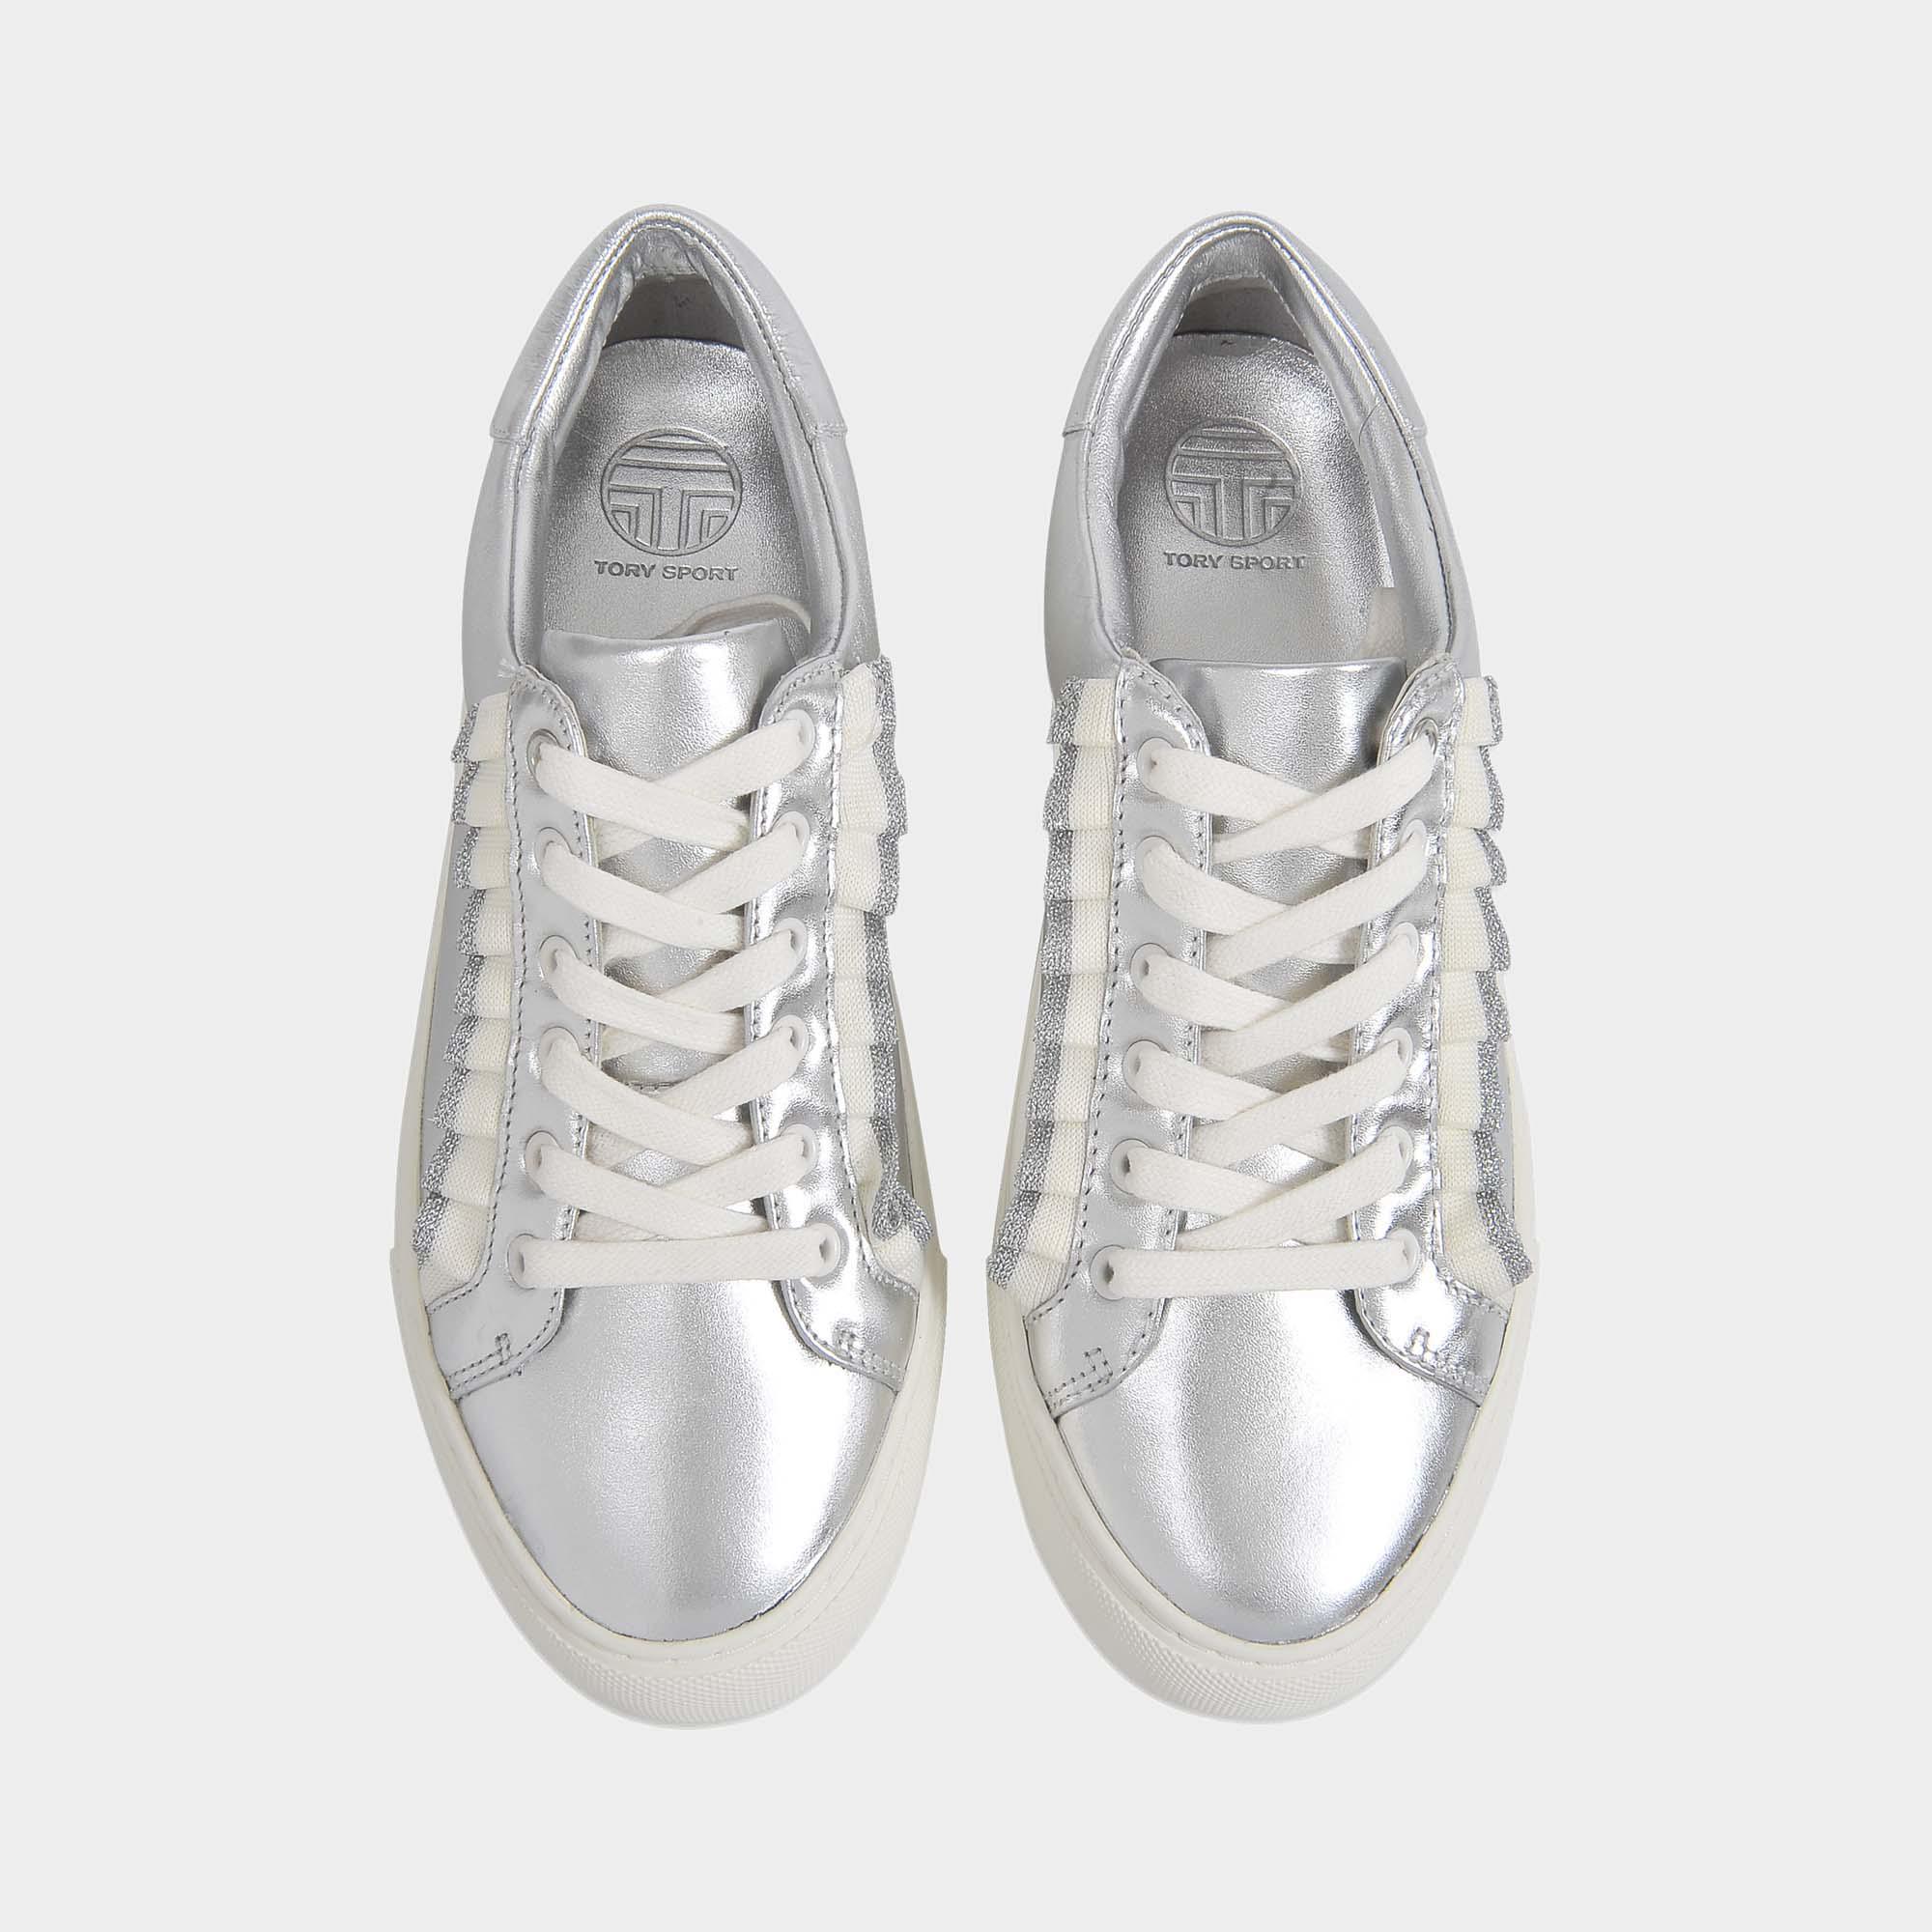 Tory Burch Tory Sport Ruffle Sneakers In Silver Calf in Metallic - Lyst